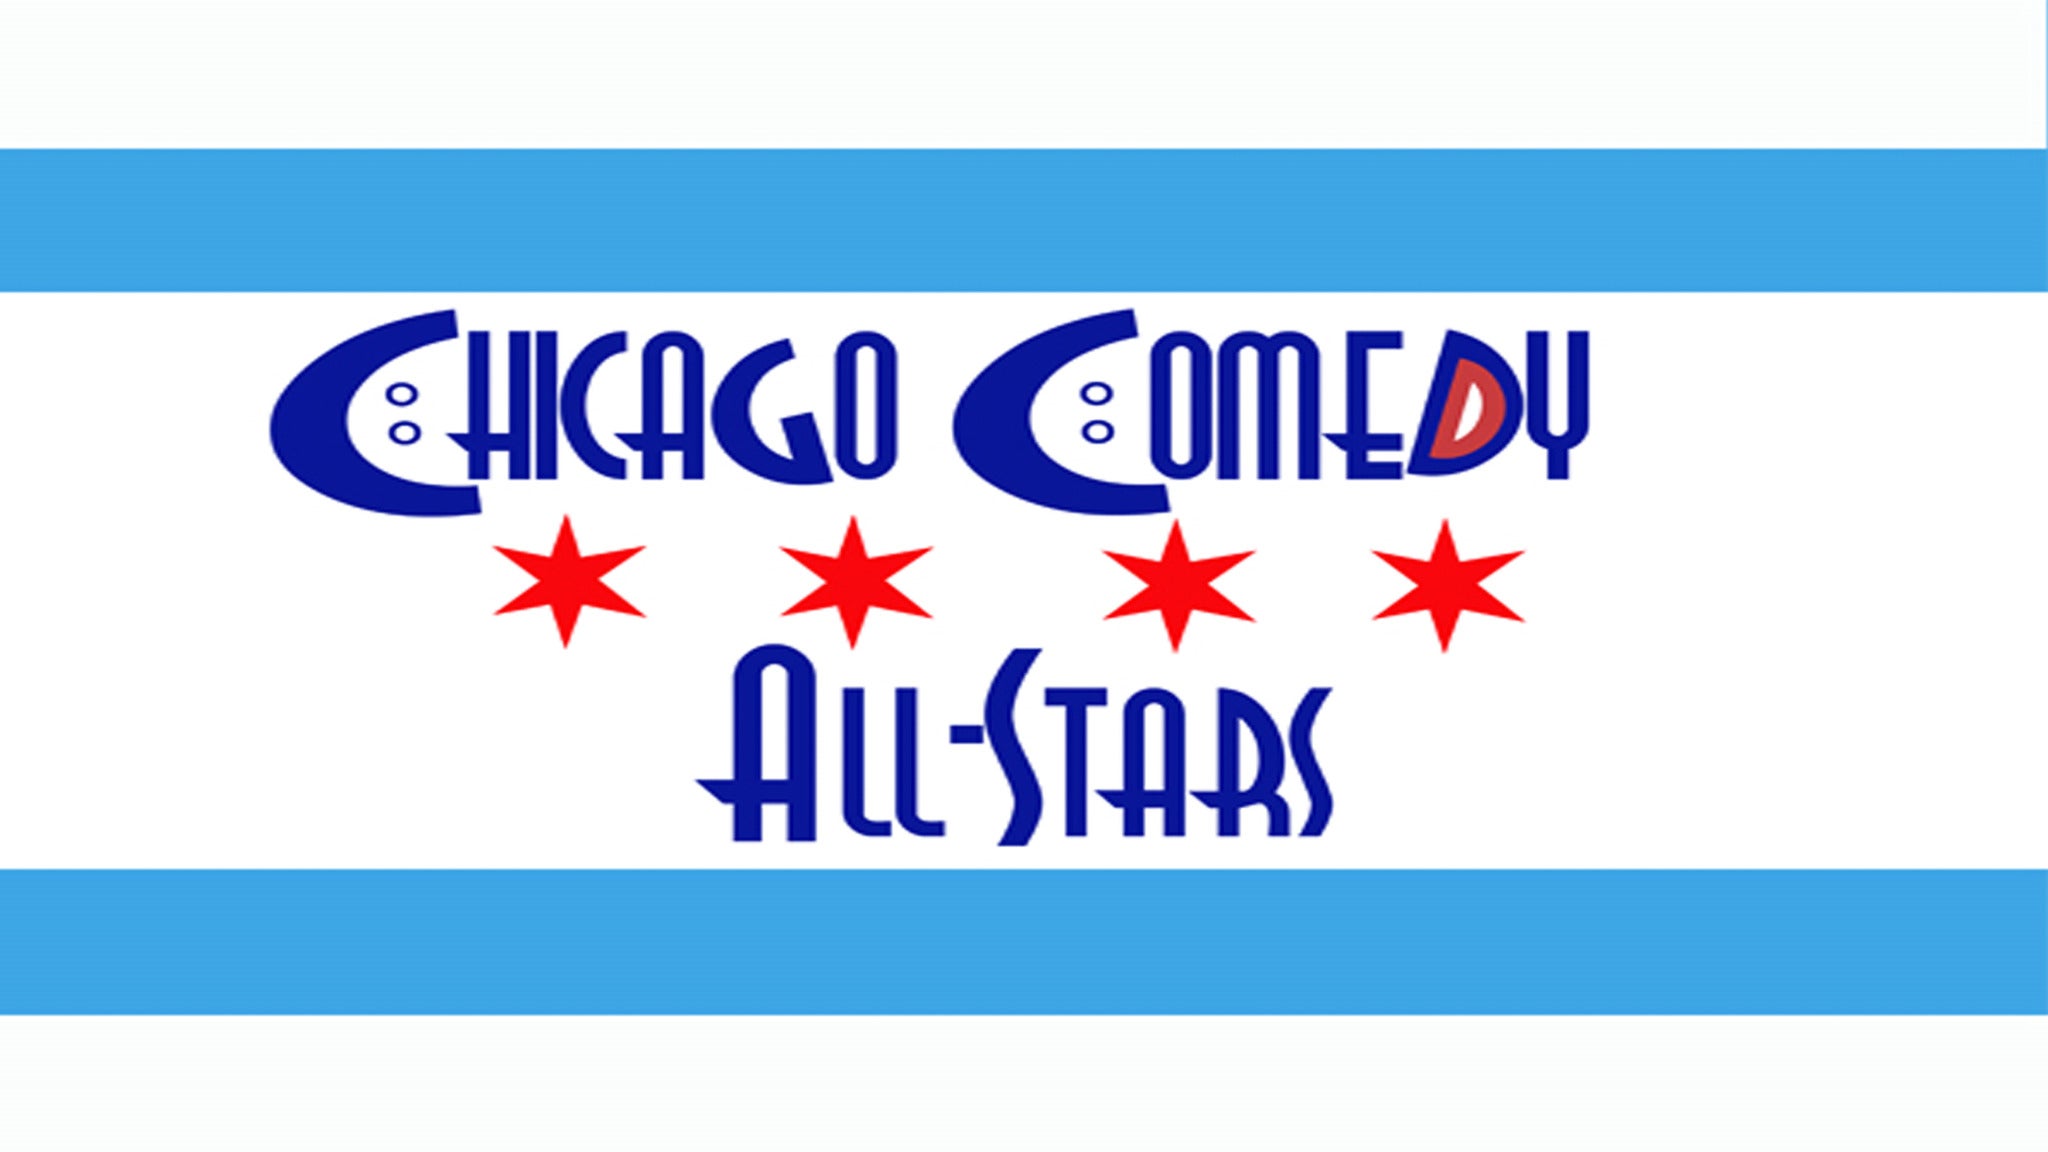 Chicago Comedy All Stars tickets, presale info, merch